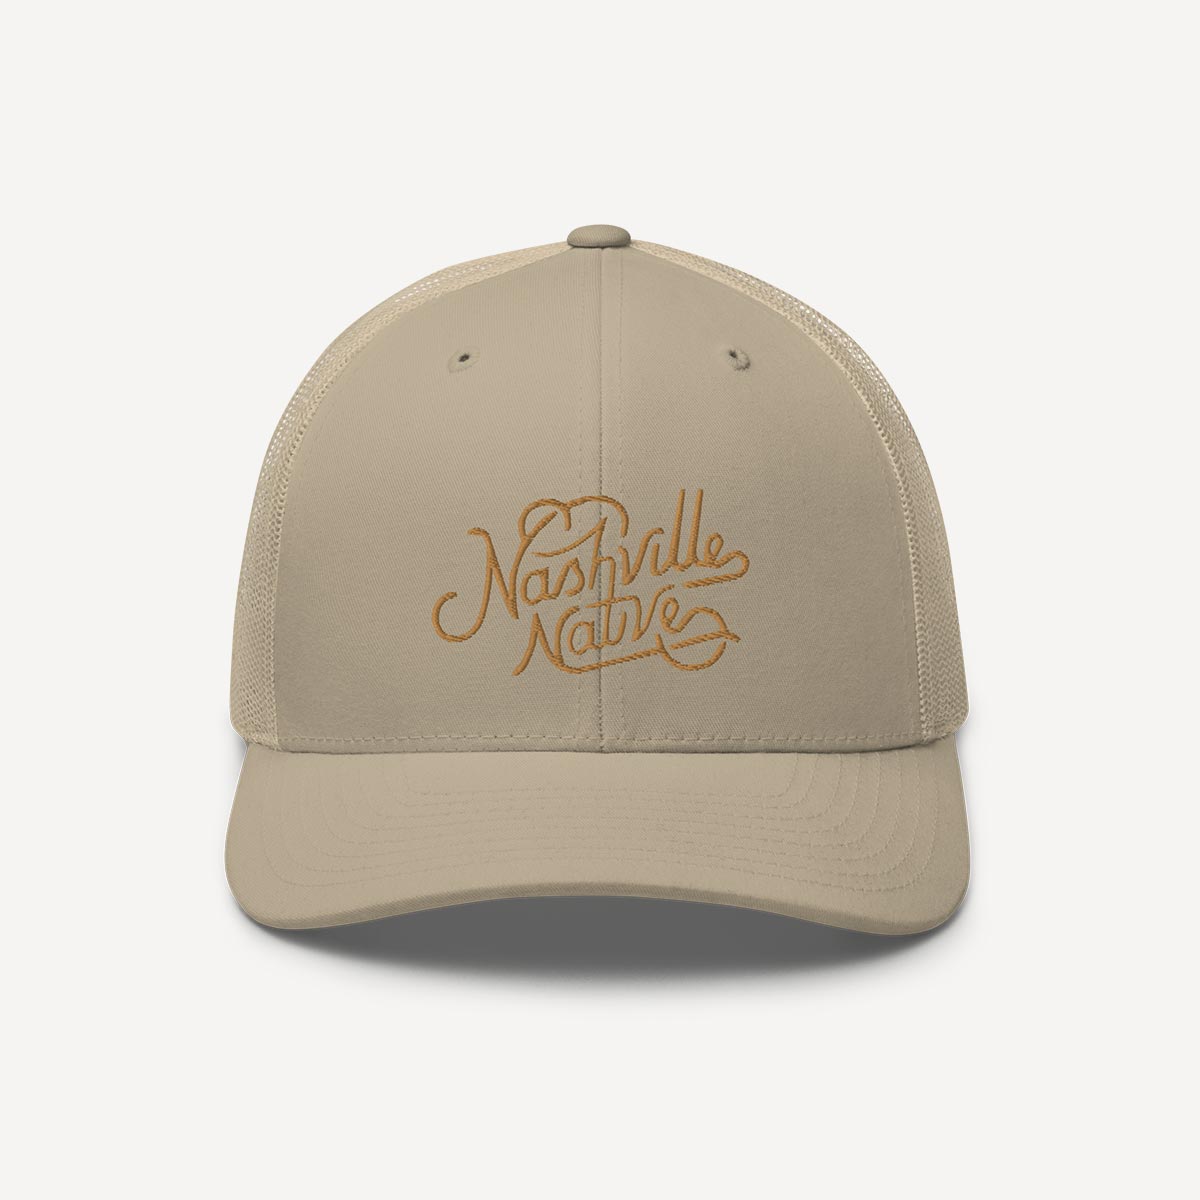 Nashville Native Trucker Hat